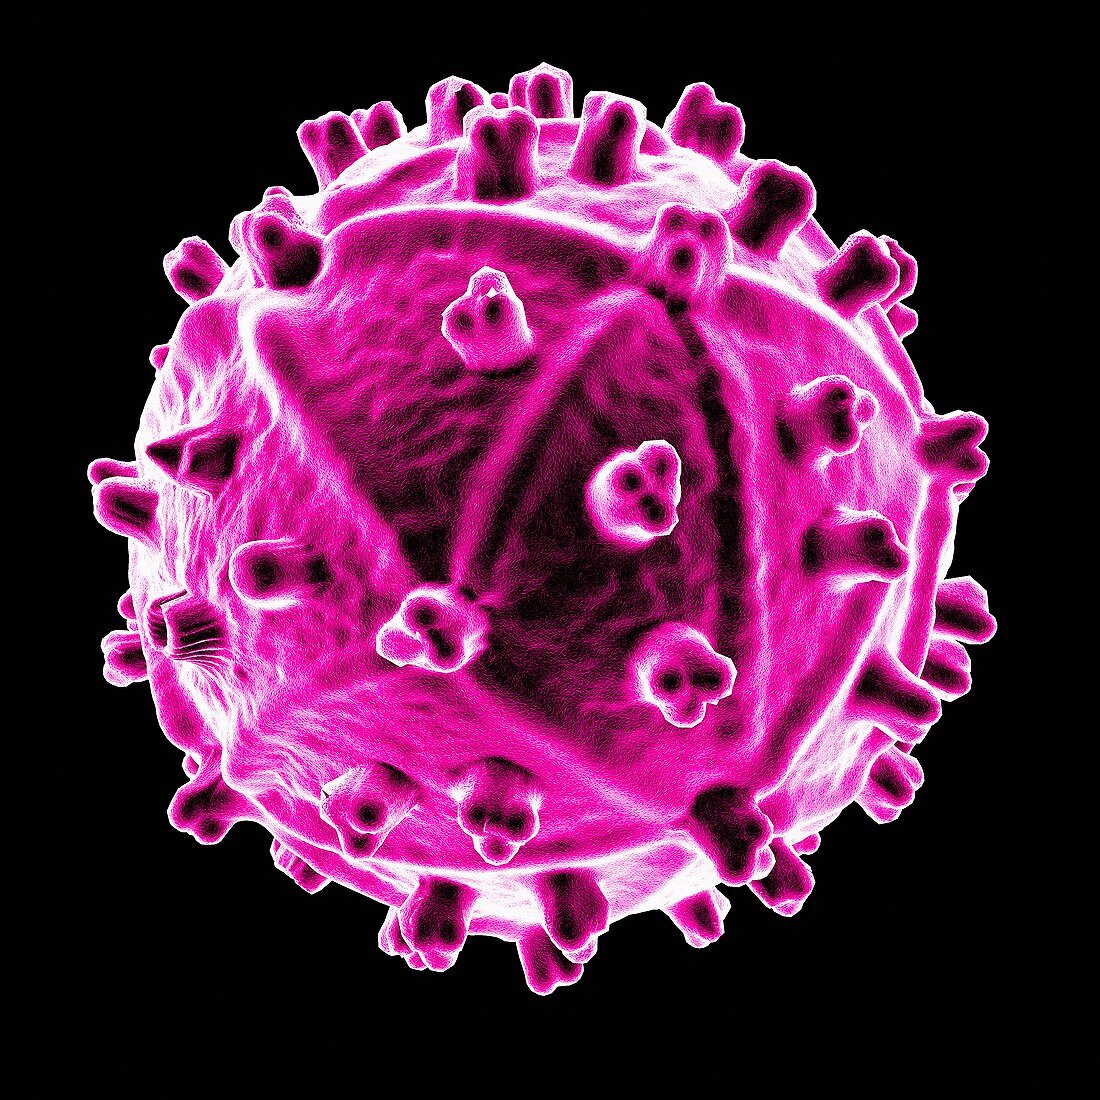 Human immunodeficiency virus,artwork